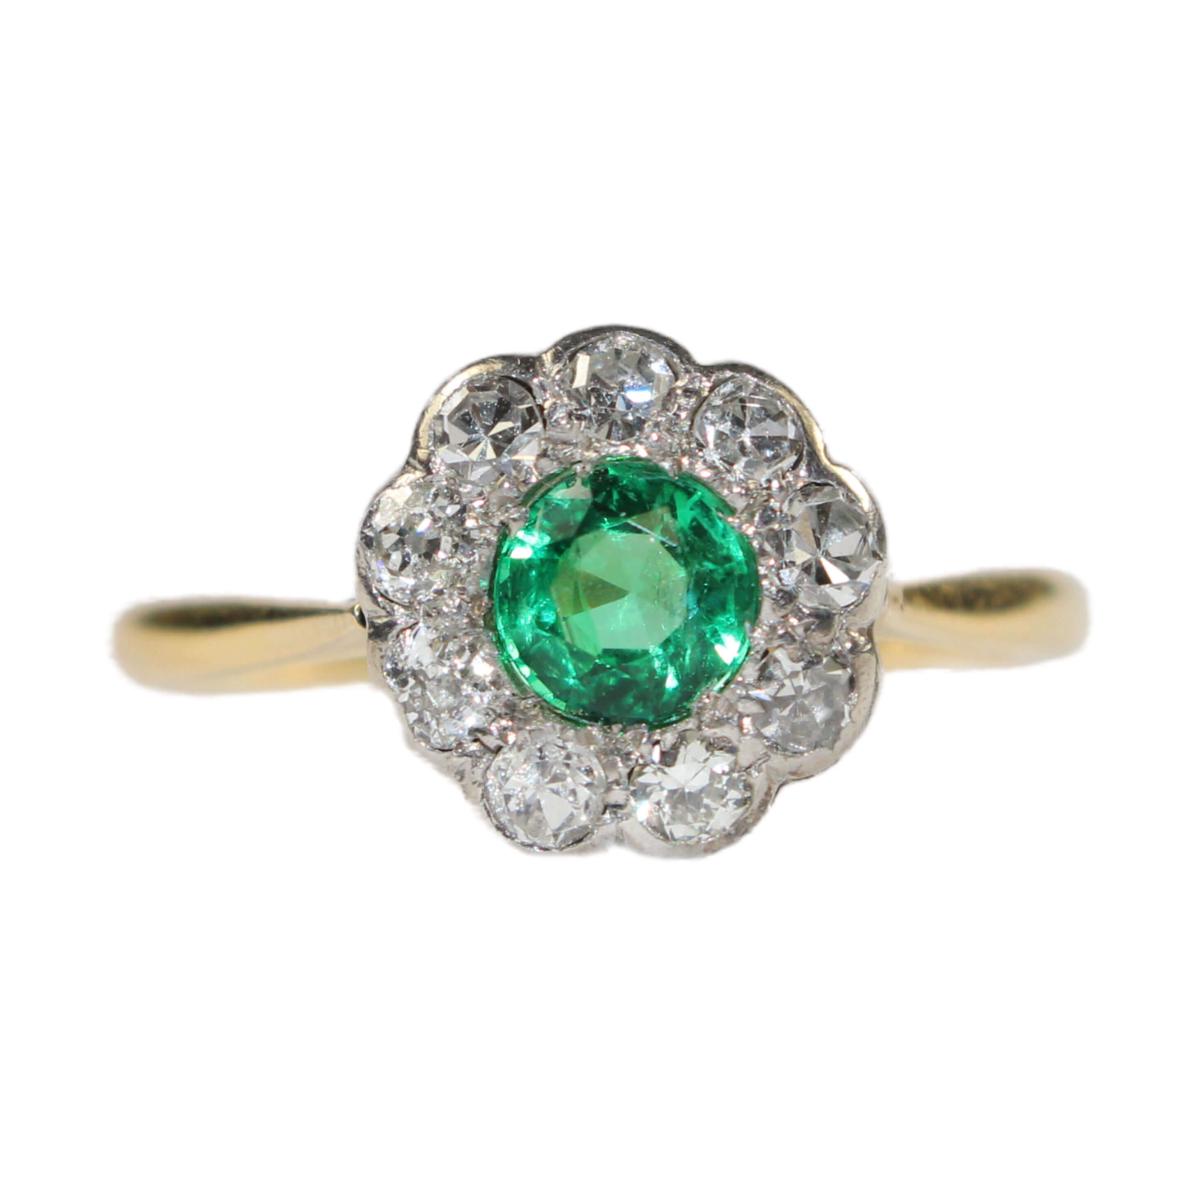 Edwardian Emerald and Diamond Cluster Ring circa 1910